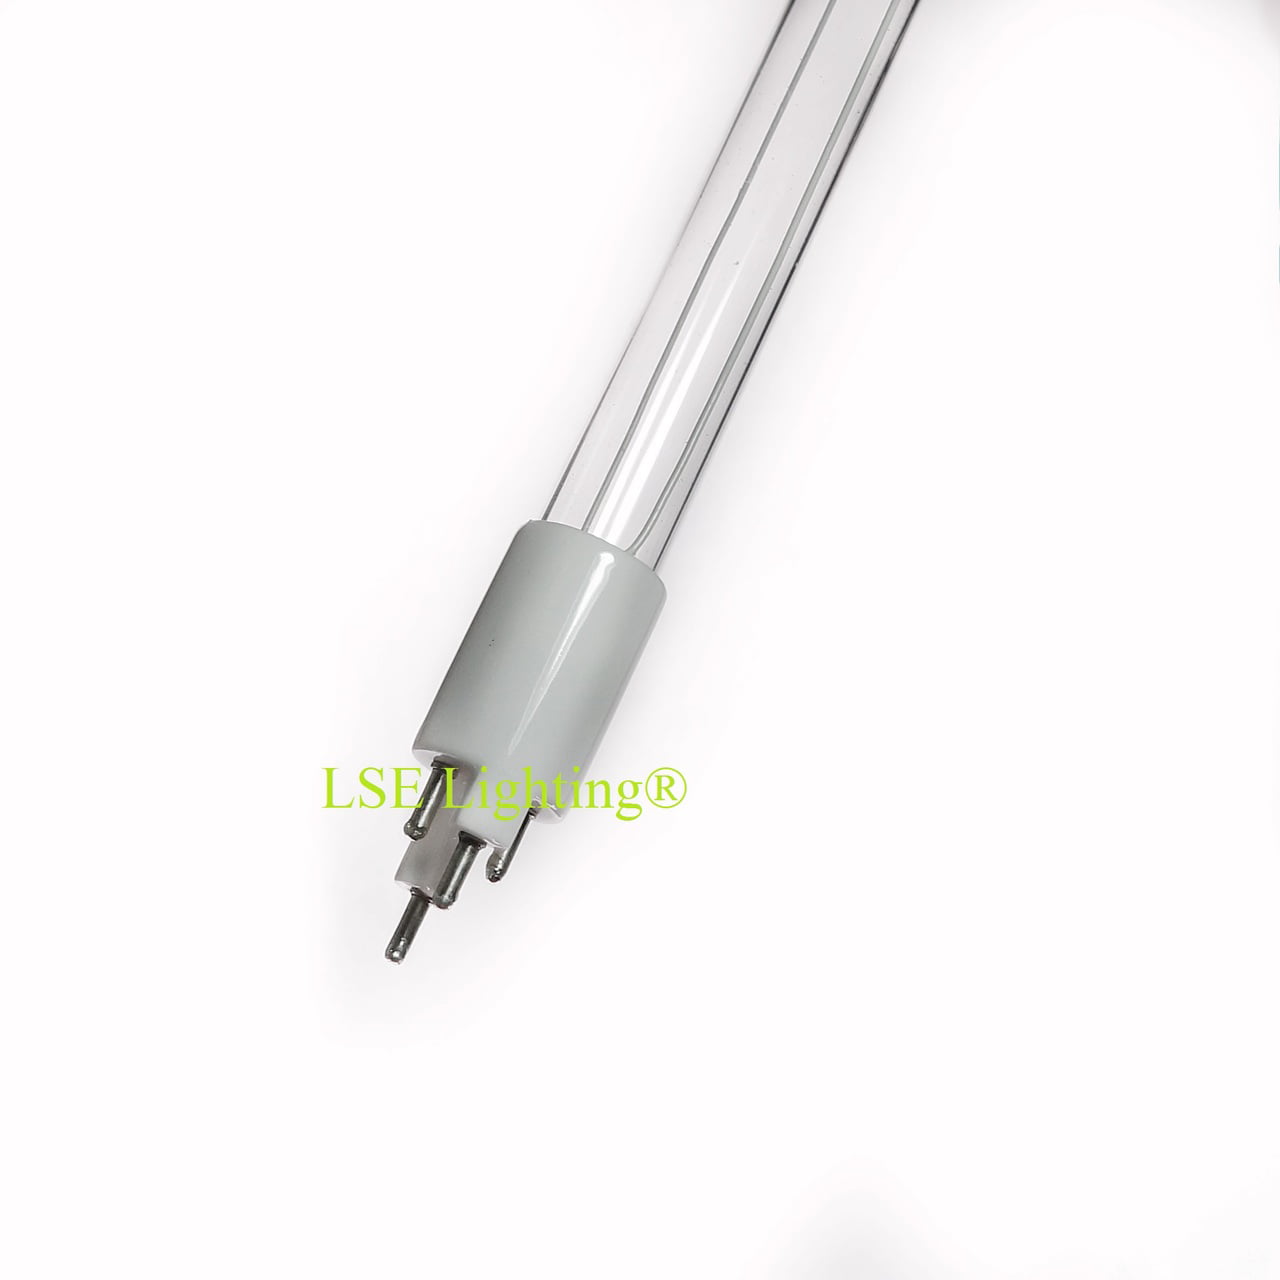 LSE Lighting compatible LAMP-7014 UV bulb for Magic Clean Purifier AC-7014 